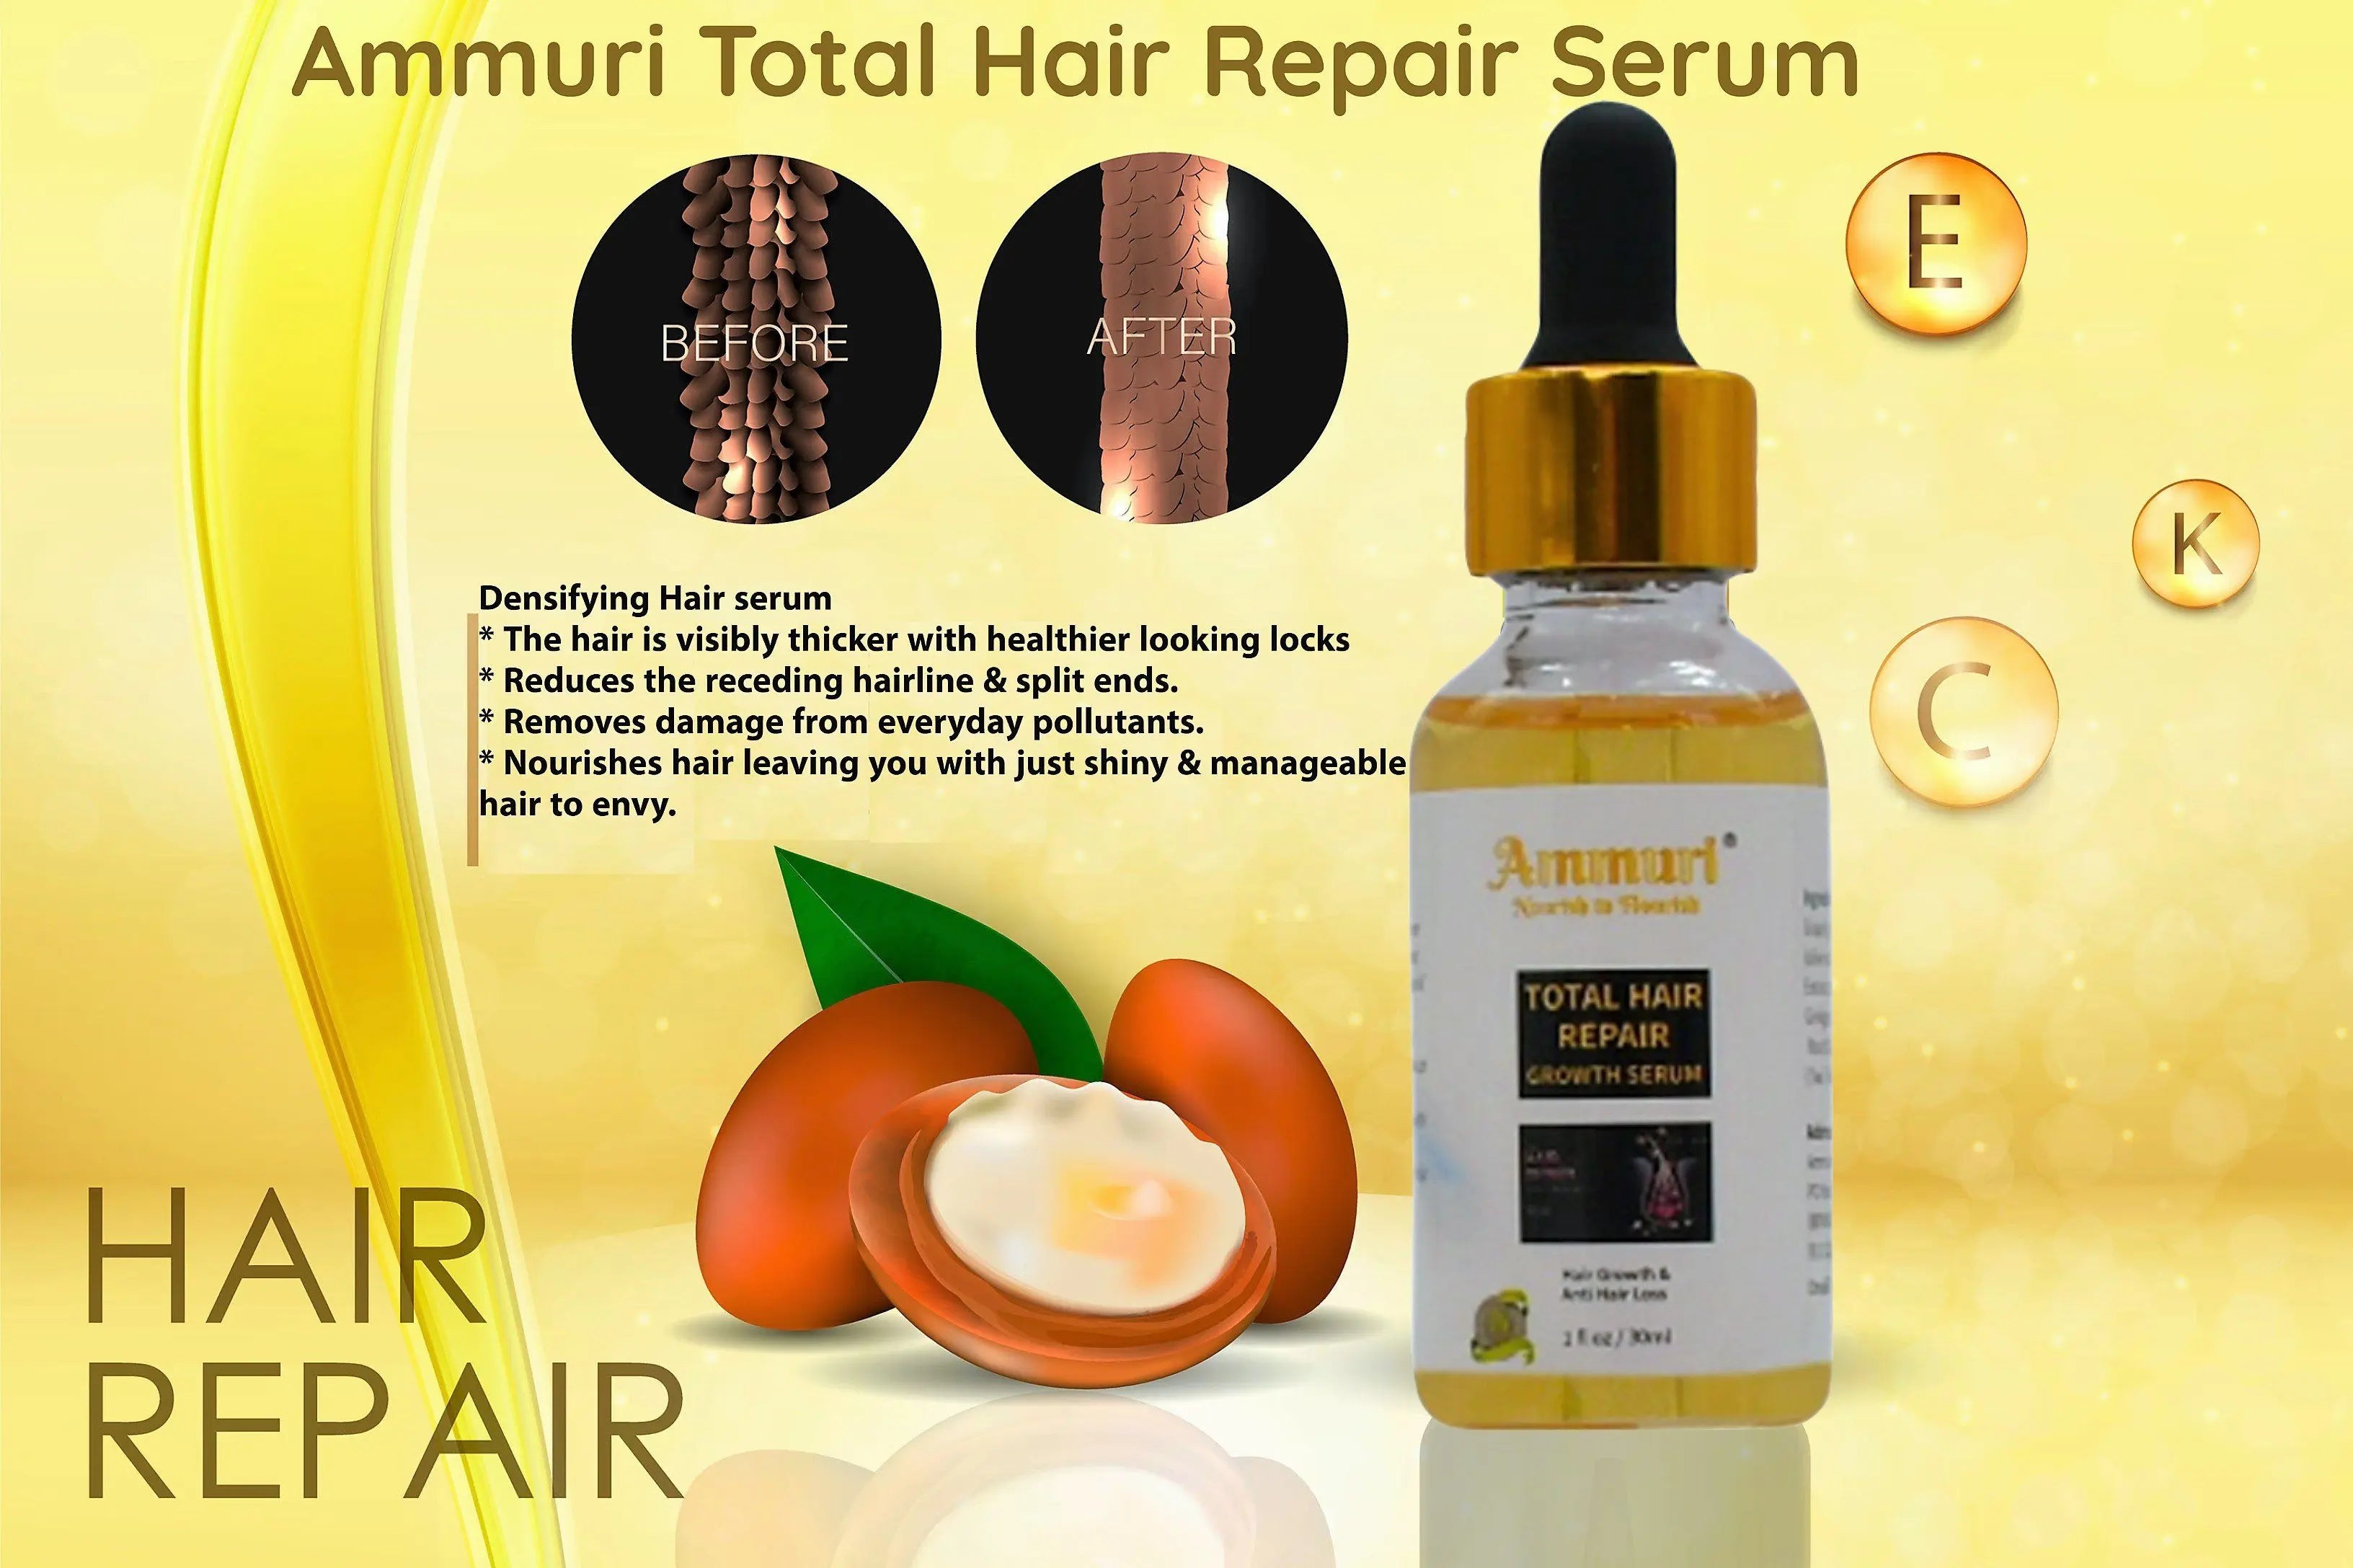 Ammuri Anti Hair Repair Growth Serum Hair Thinning Balding Repair Hair Follicles for Men and Women Ammuri Skincare